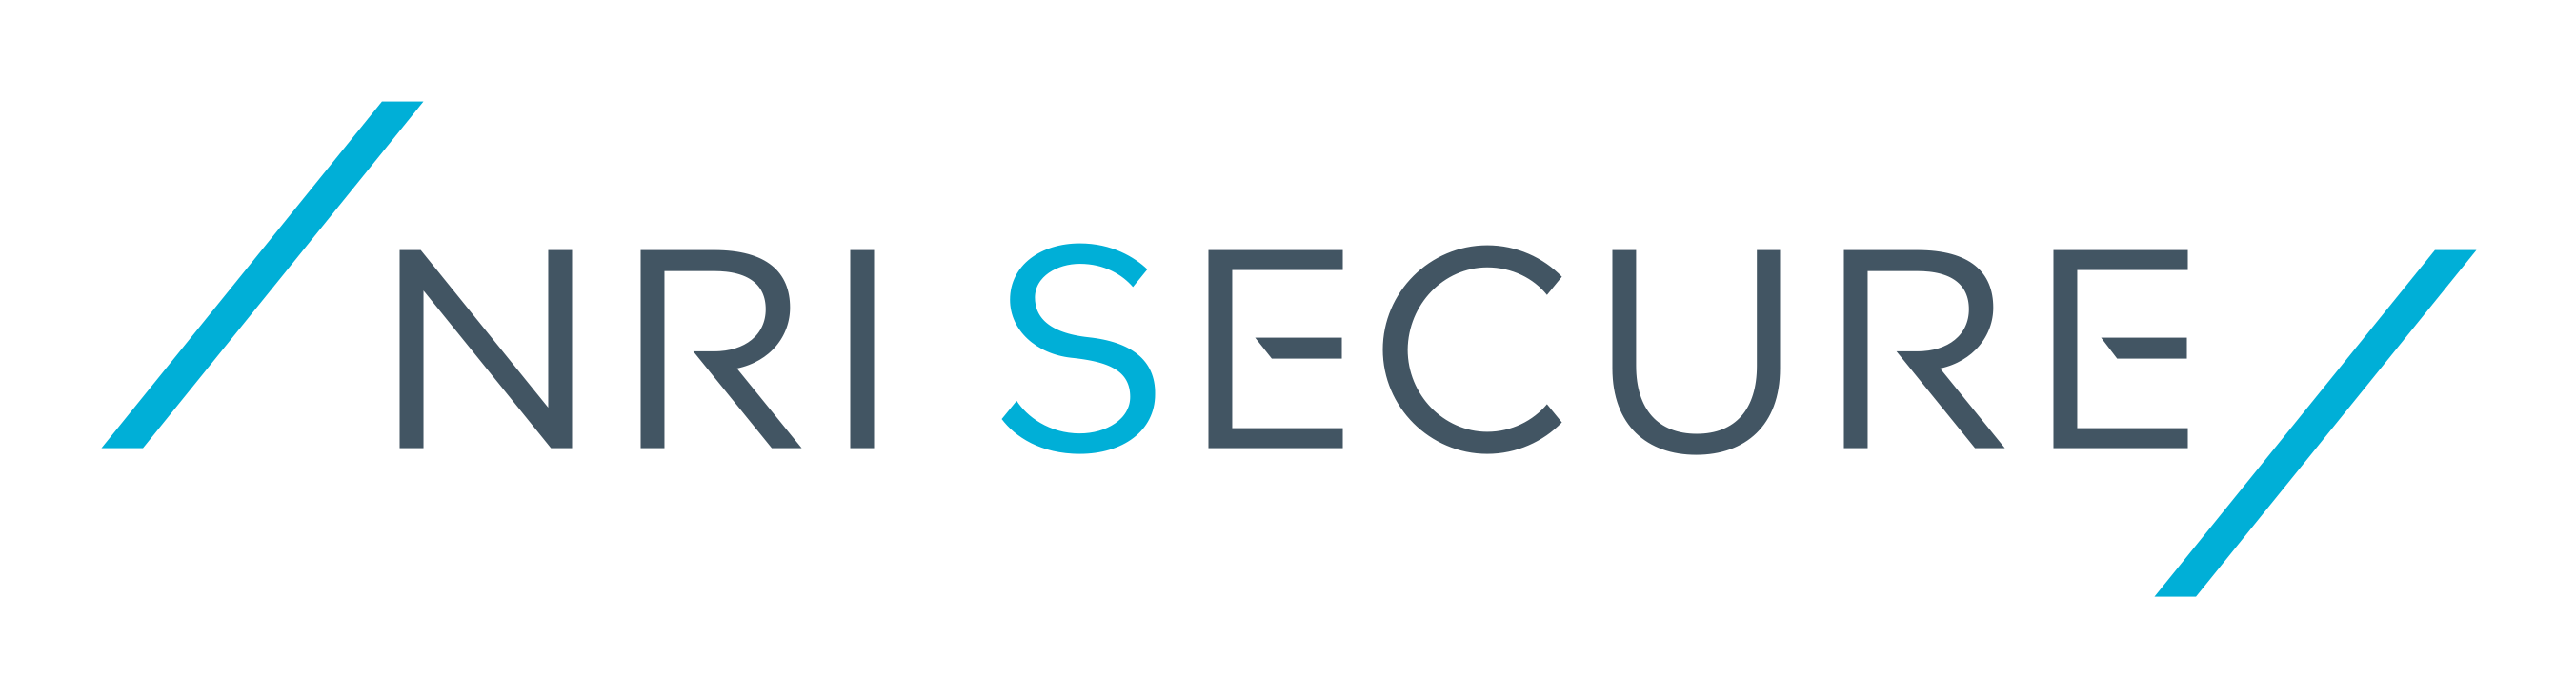 NRI SecureTechnologies, Ltd. Logo